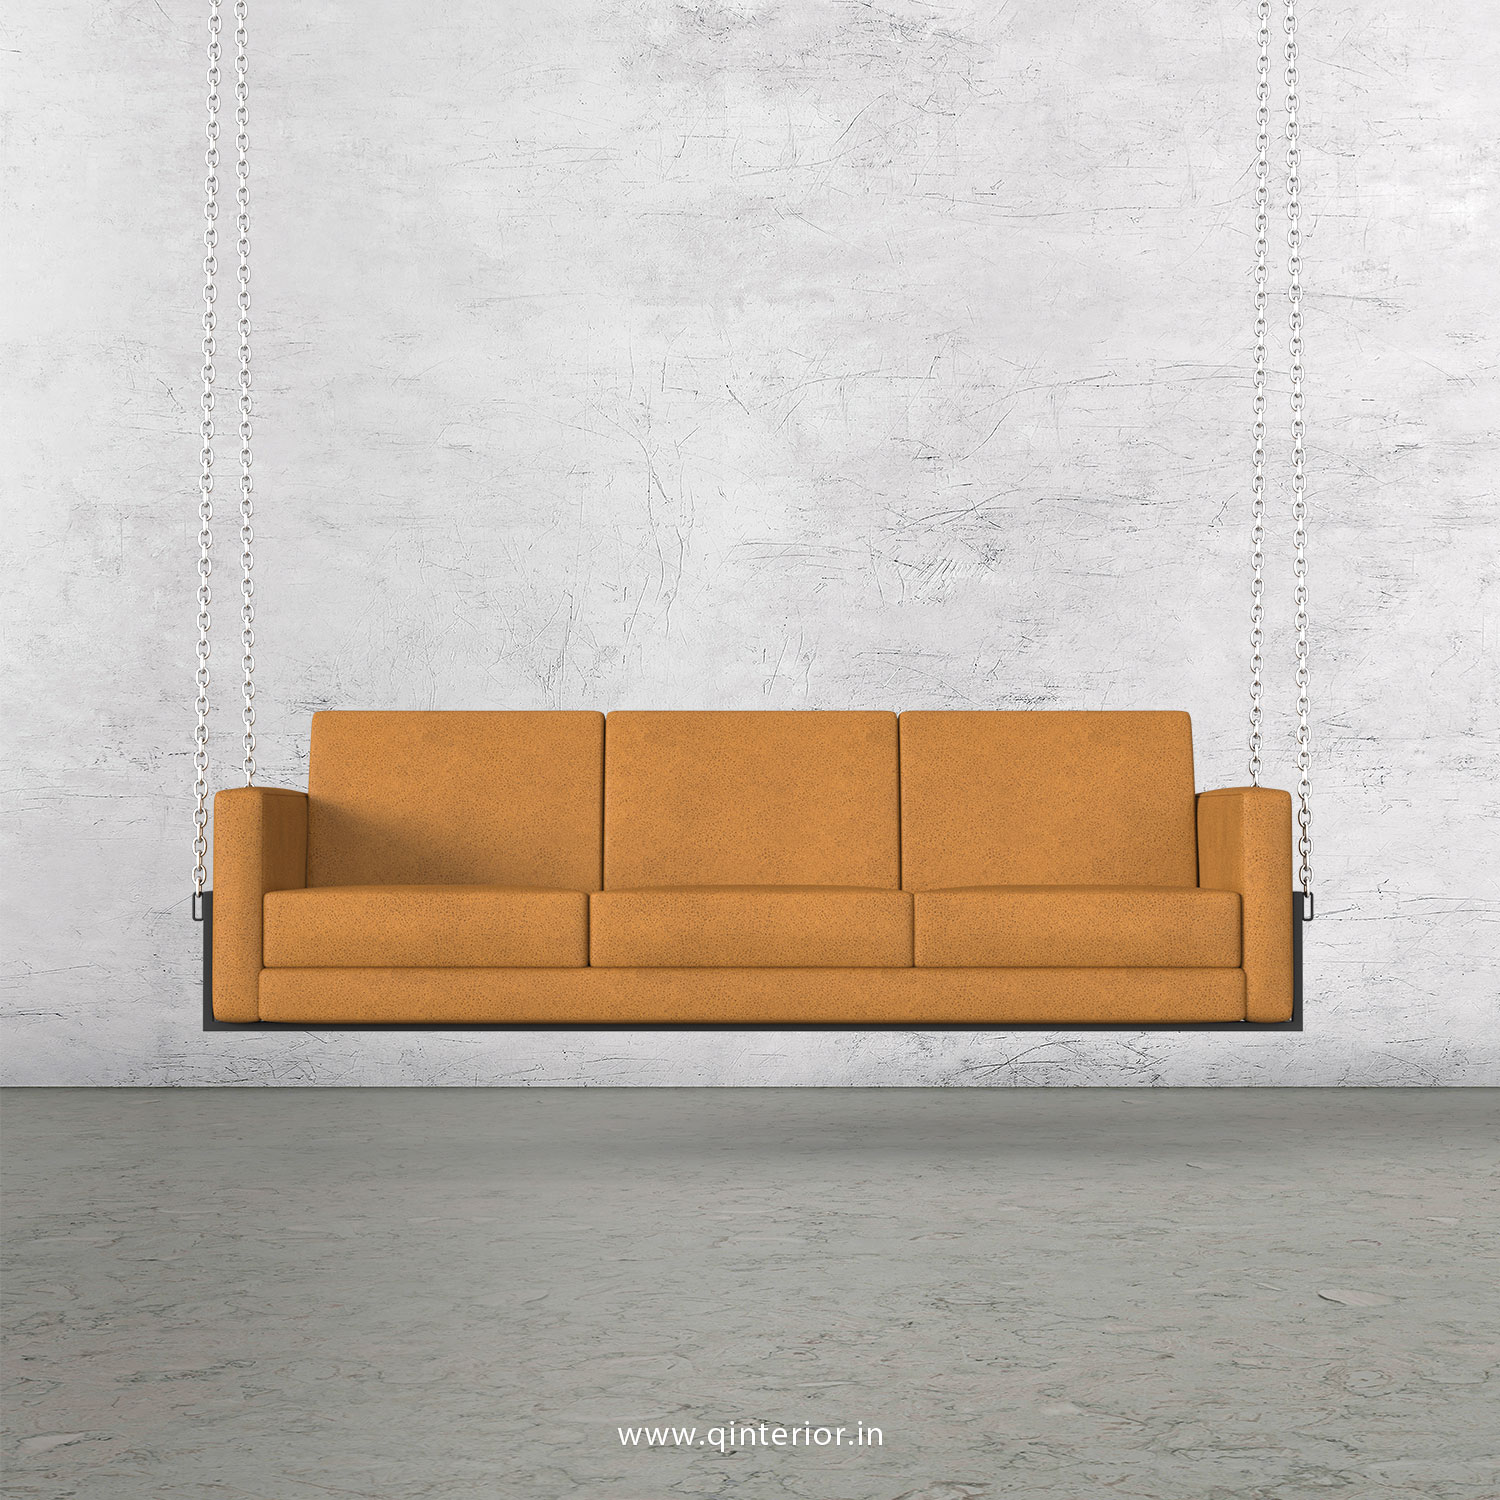 NIRVANA 3 Seater Swing Sofa in Fab Leather Fabric - SSF001 FL14